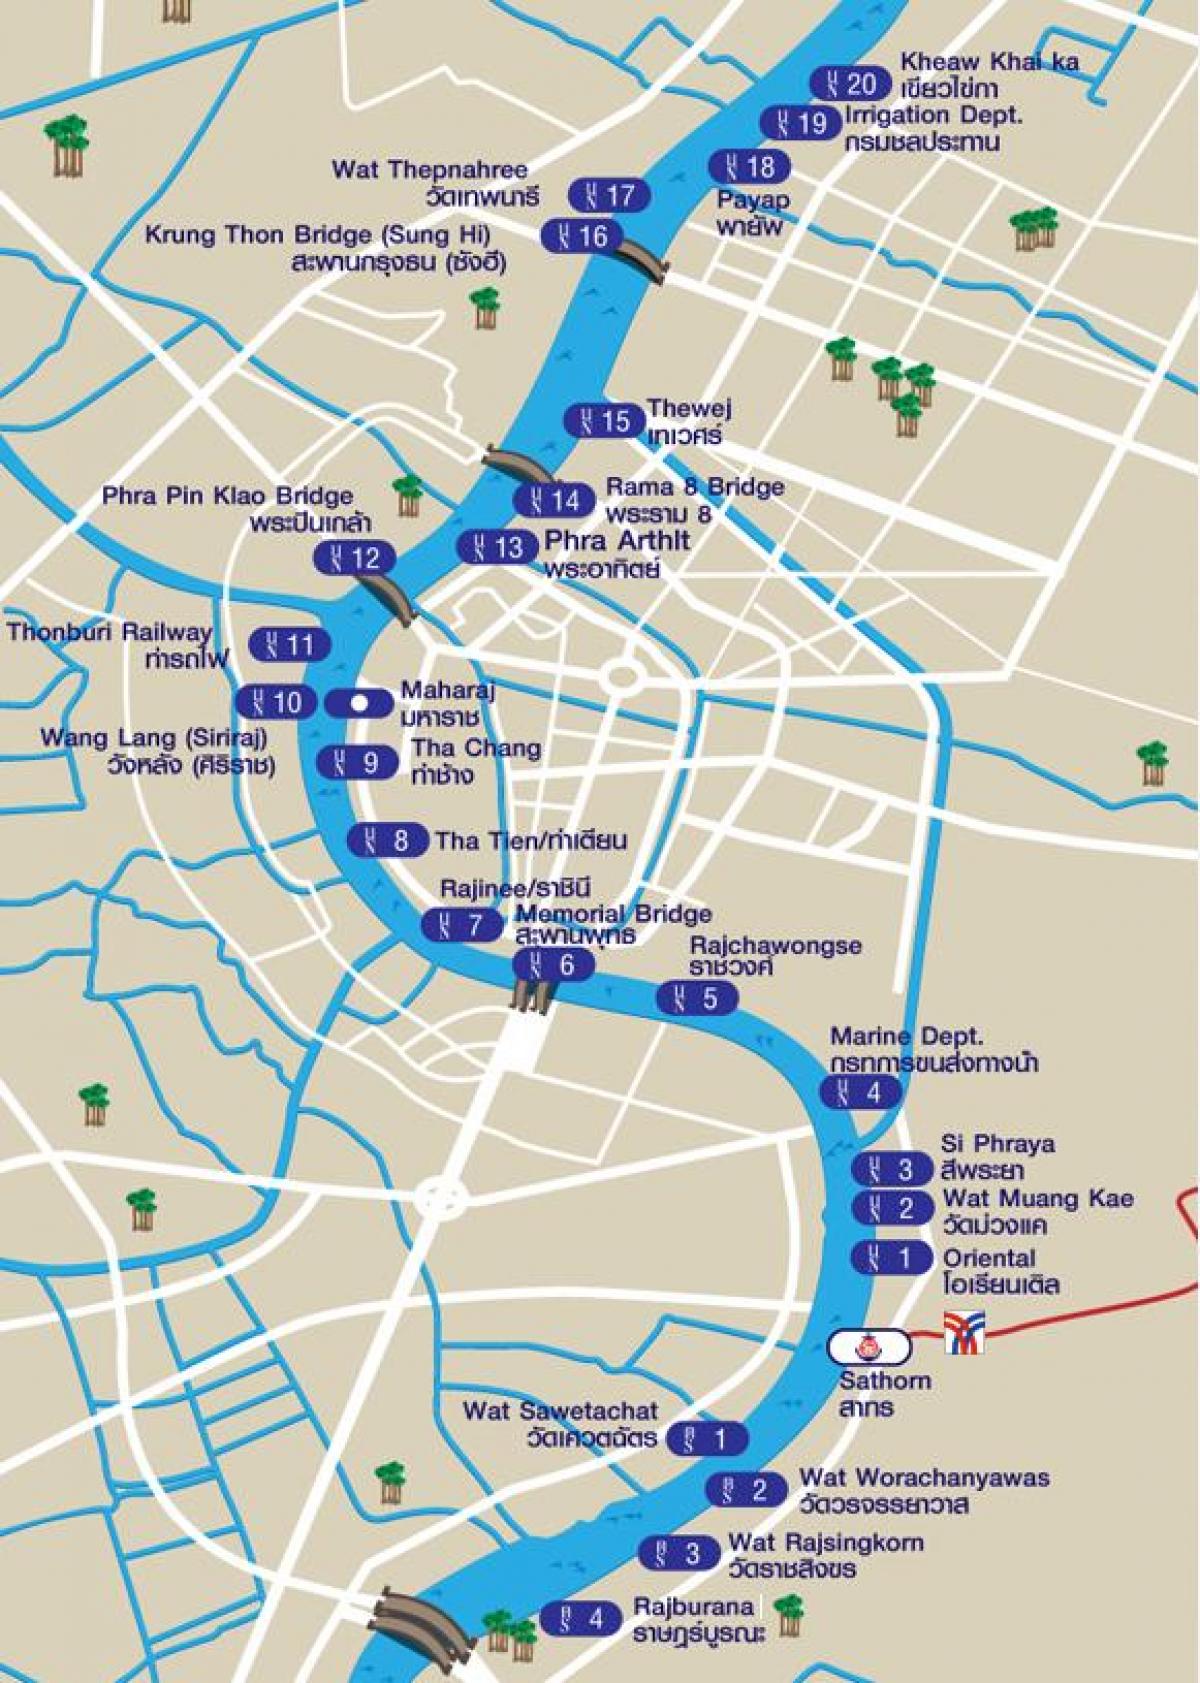 бангкок canal газрын зураг